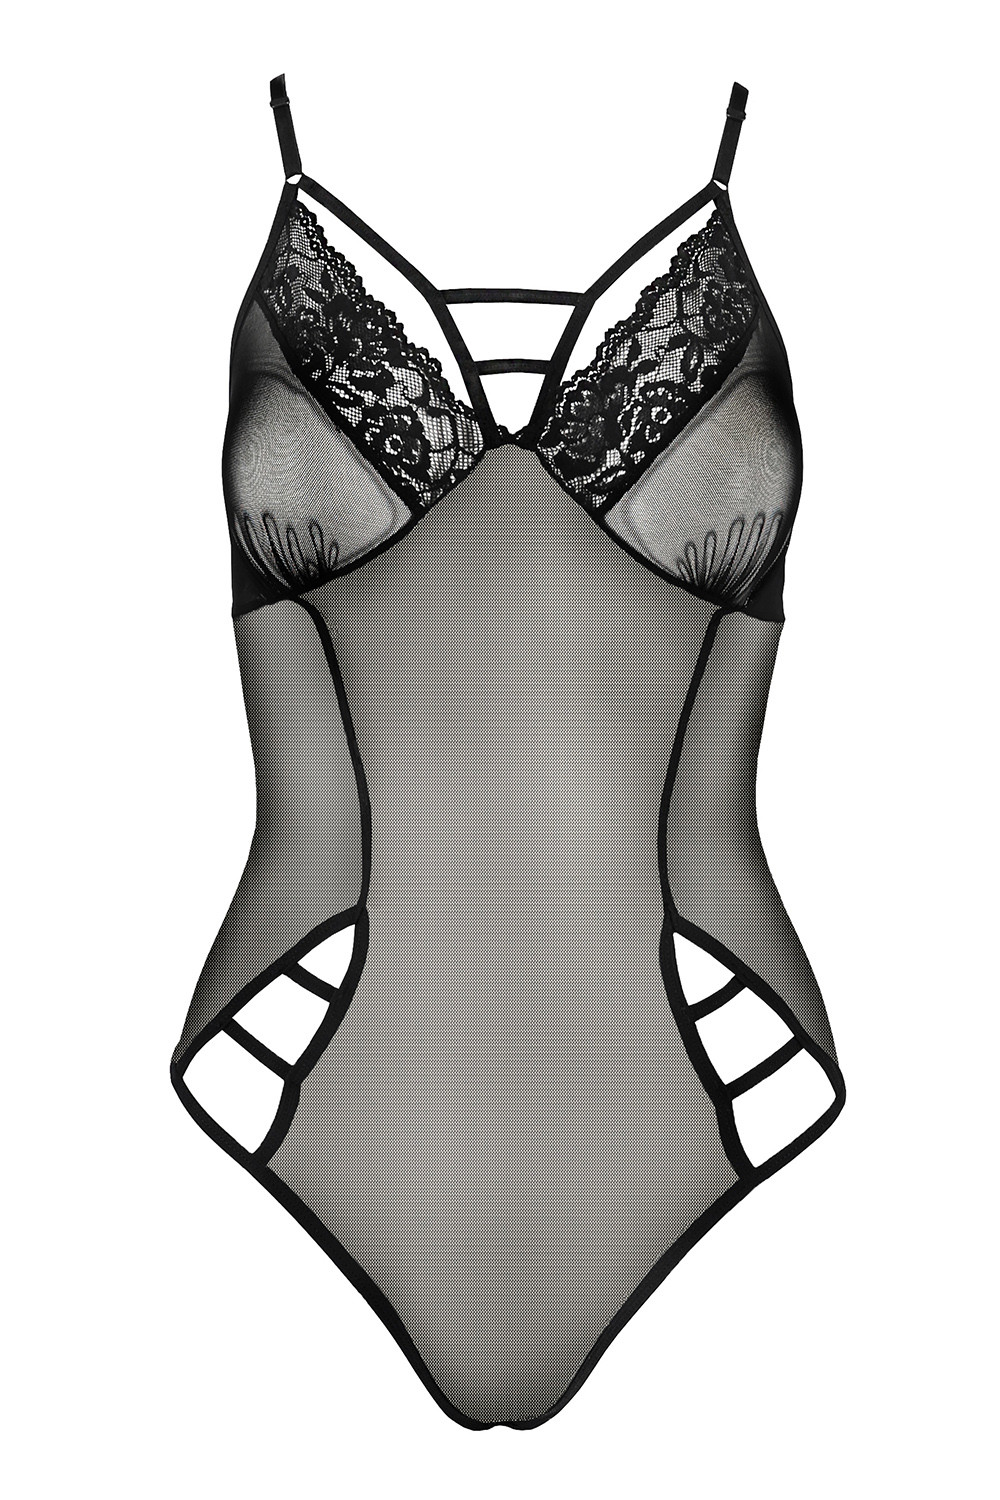 Passion Melania body kolor:black 2XL/3XL